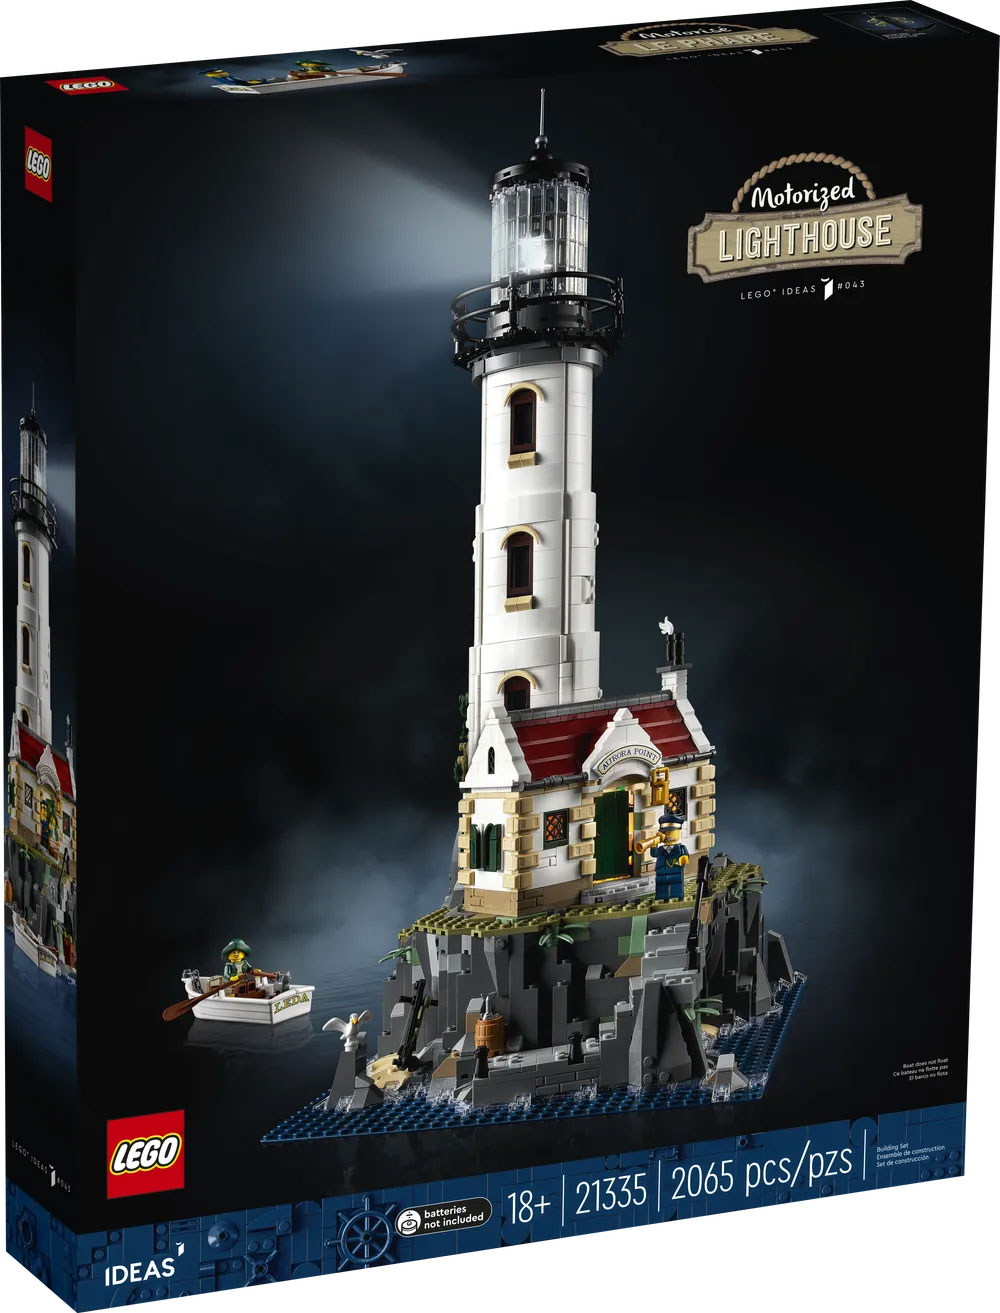 LEGO Ideas 21335 pas cher, Le phare motorisé